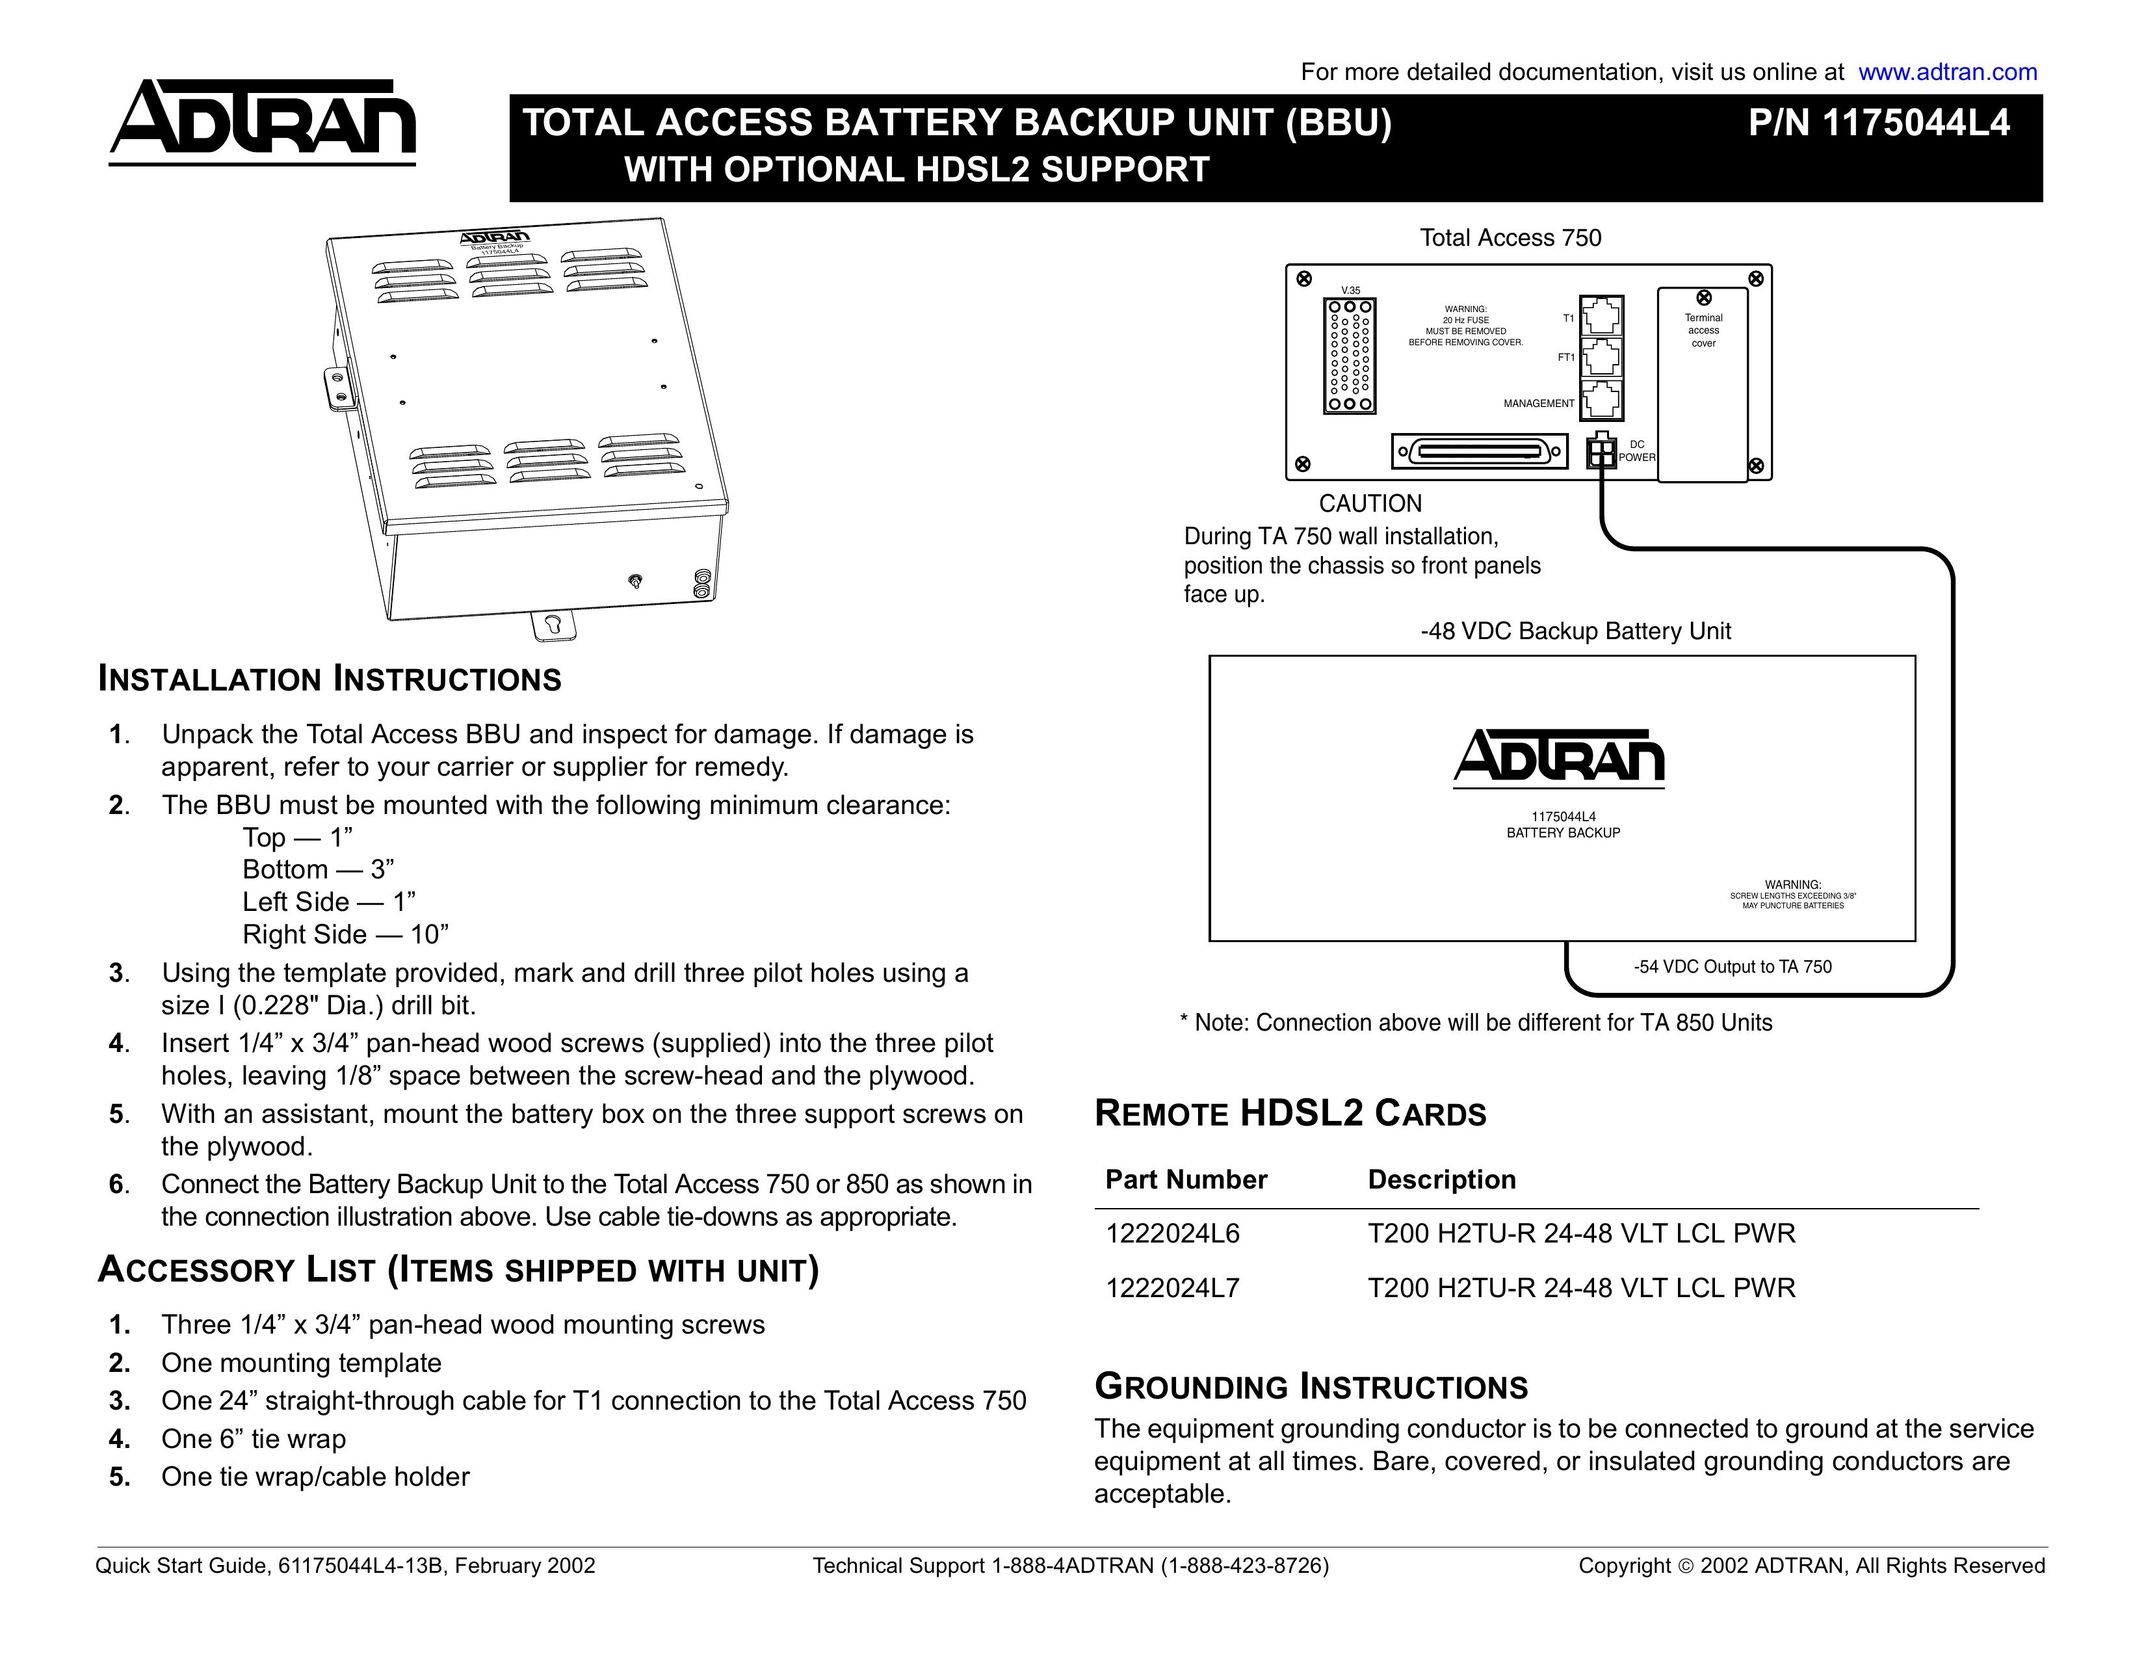 ADTRAN HDSL2 Battery Charger User Manual (Page 1)